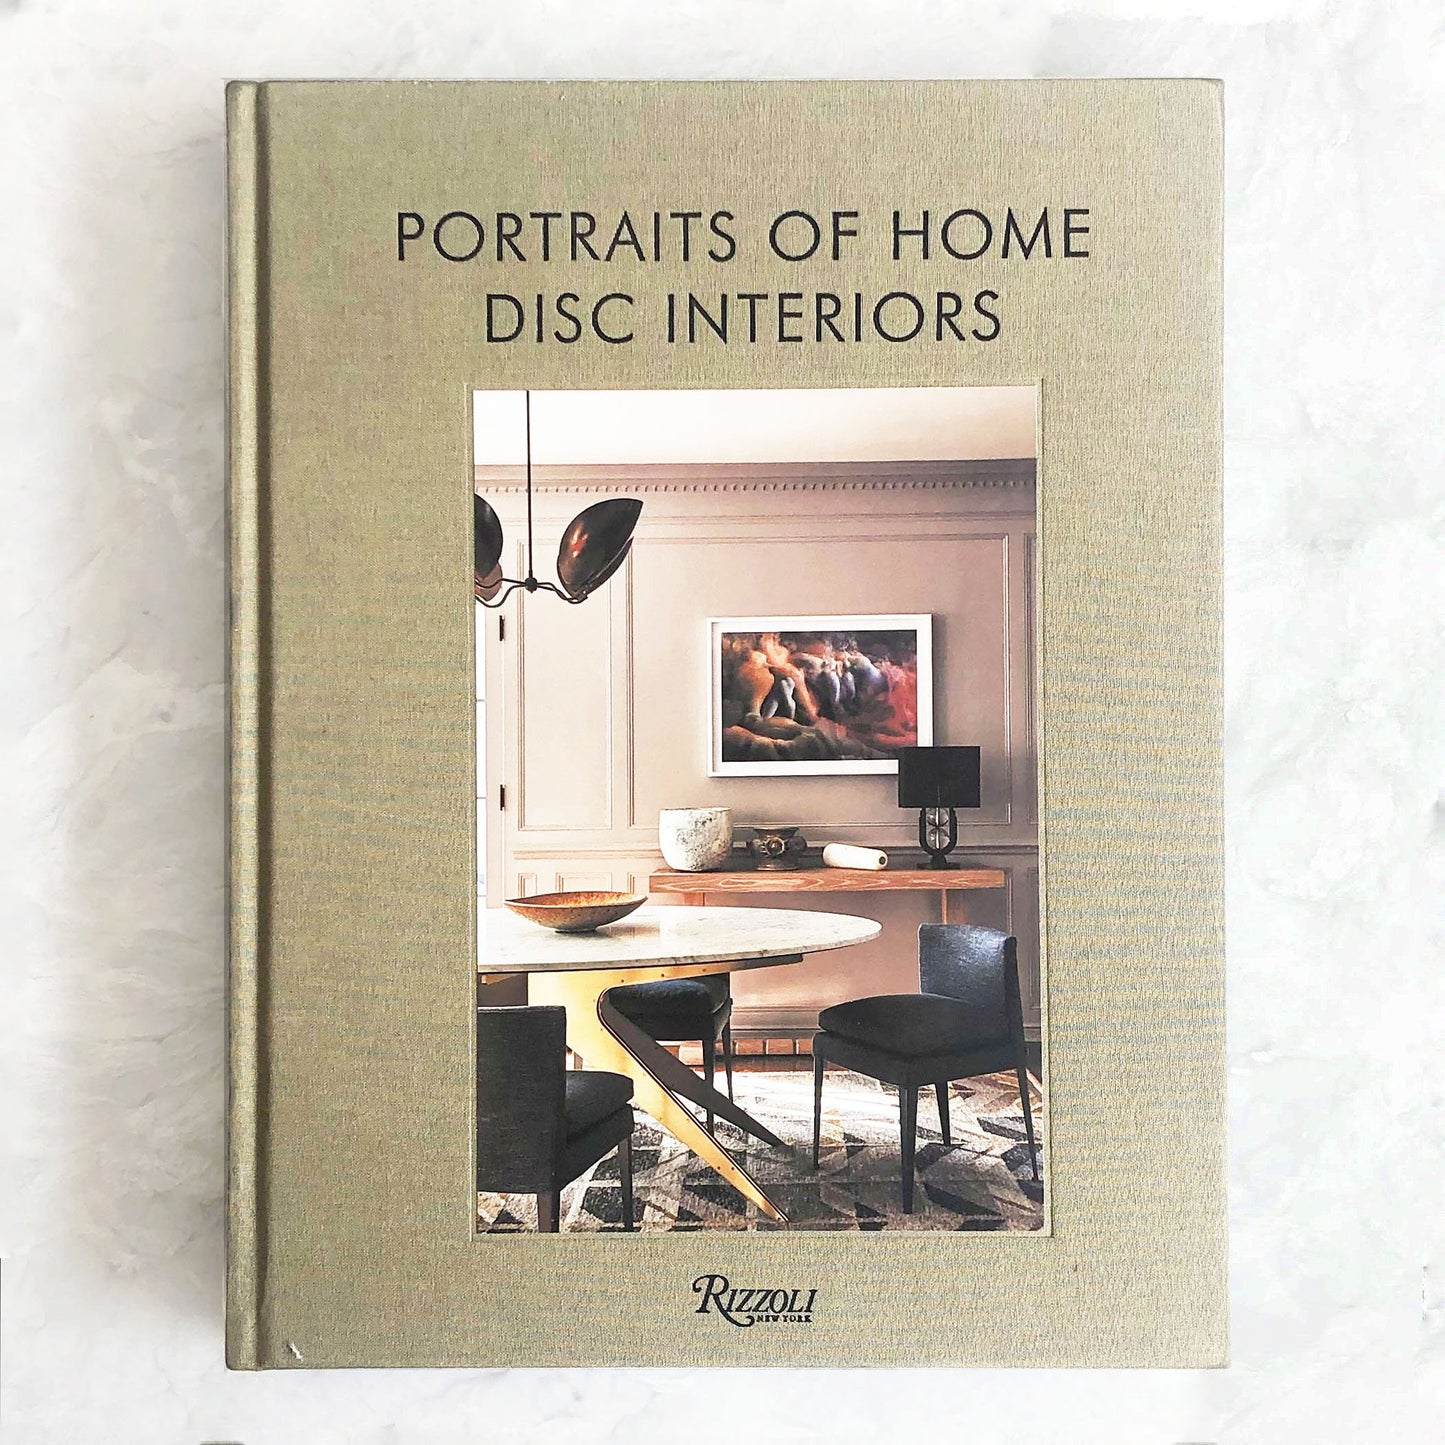 Portraits of Home: Disc Interiors